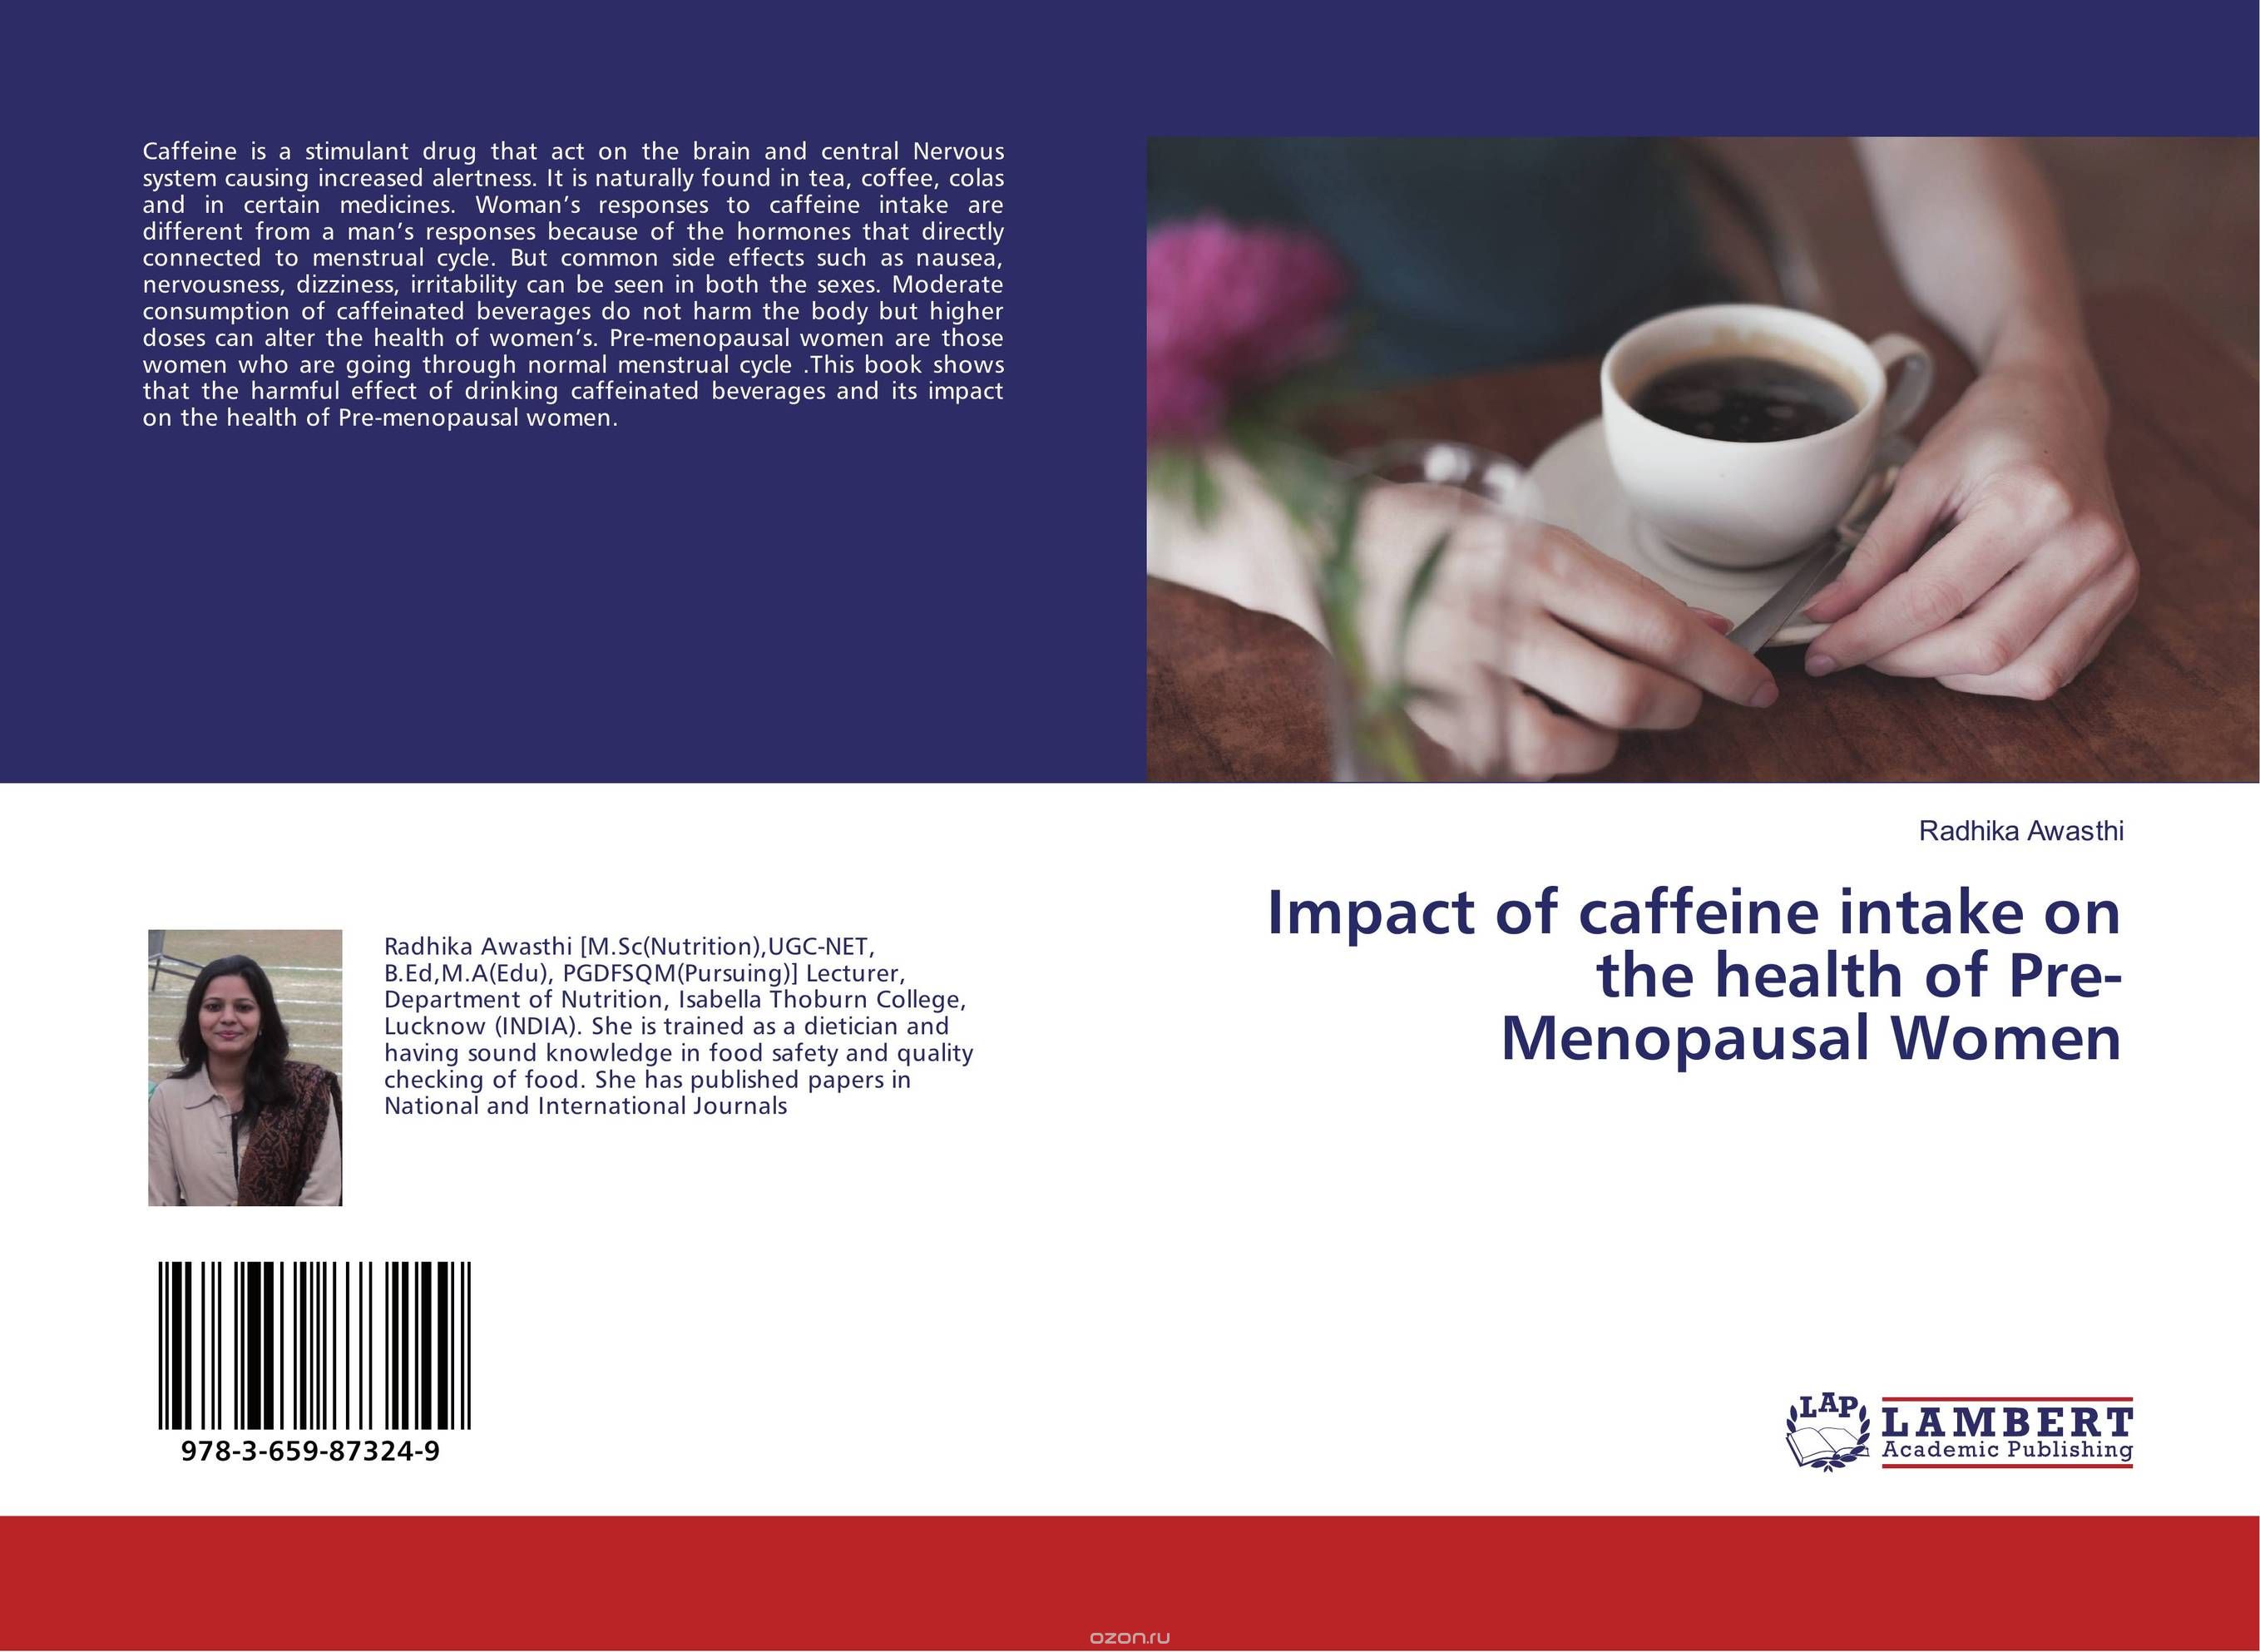 Скачать книгу "Impact of caffeine intake on the health of Pre-Menopausal Women"